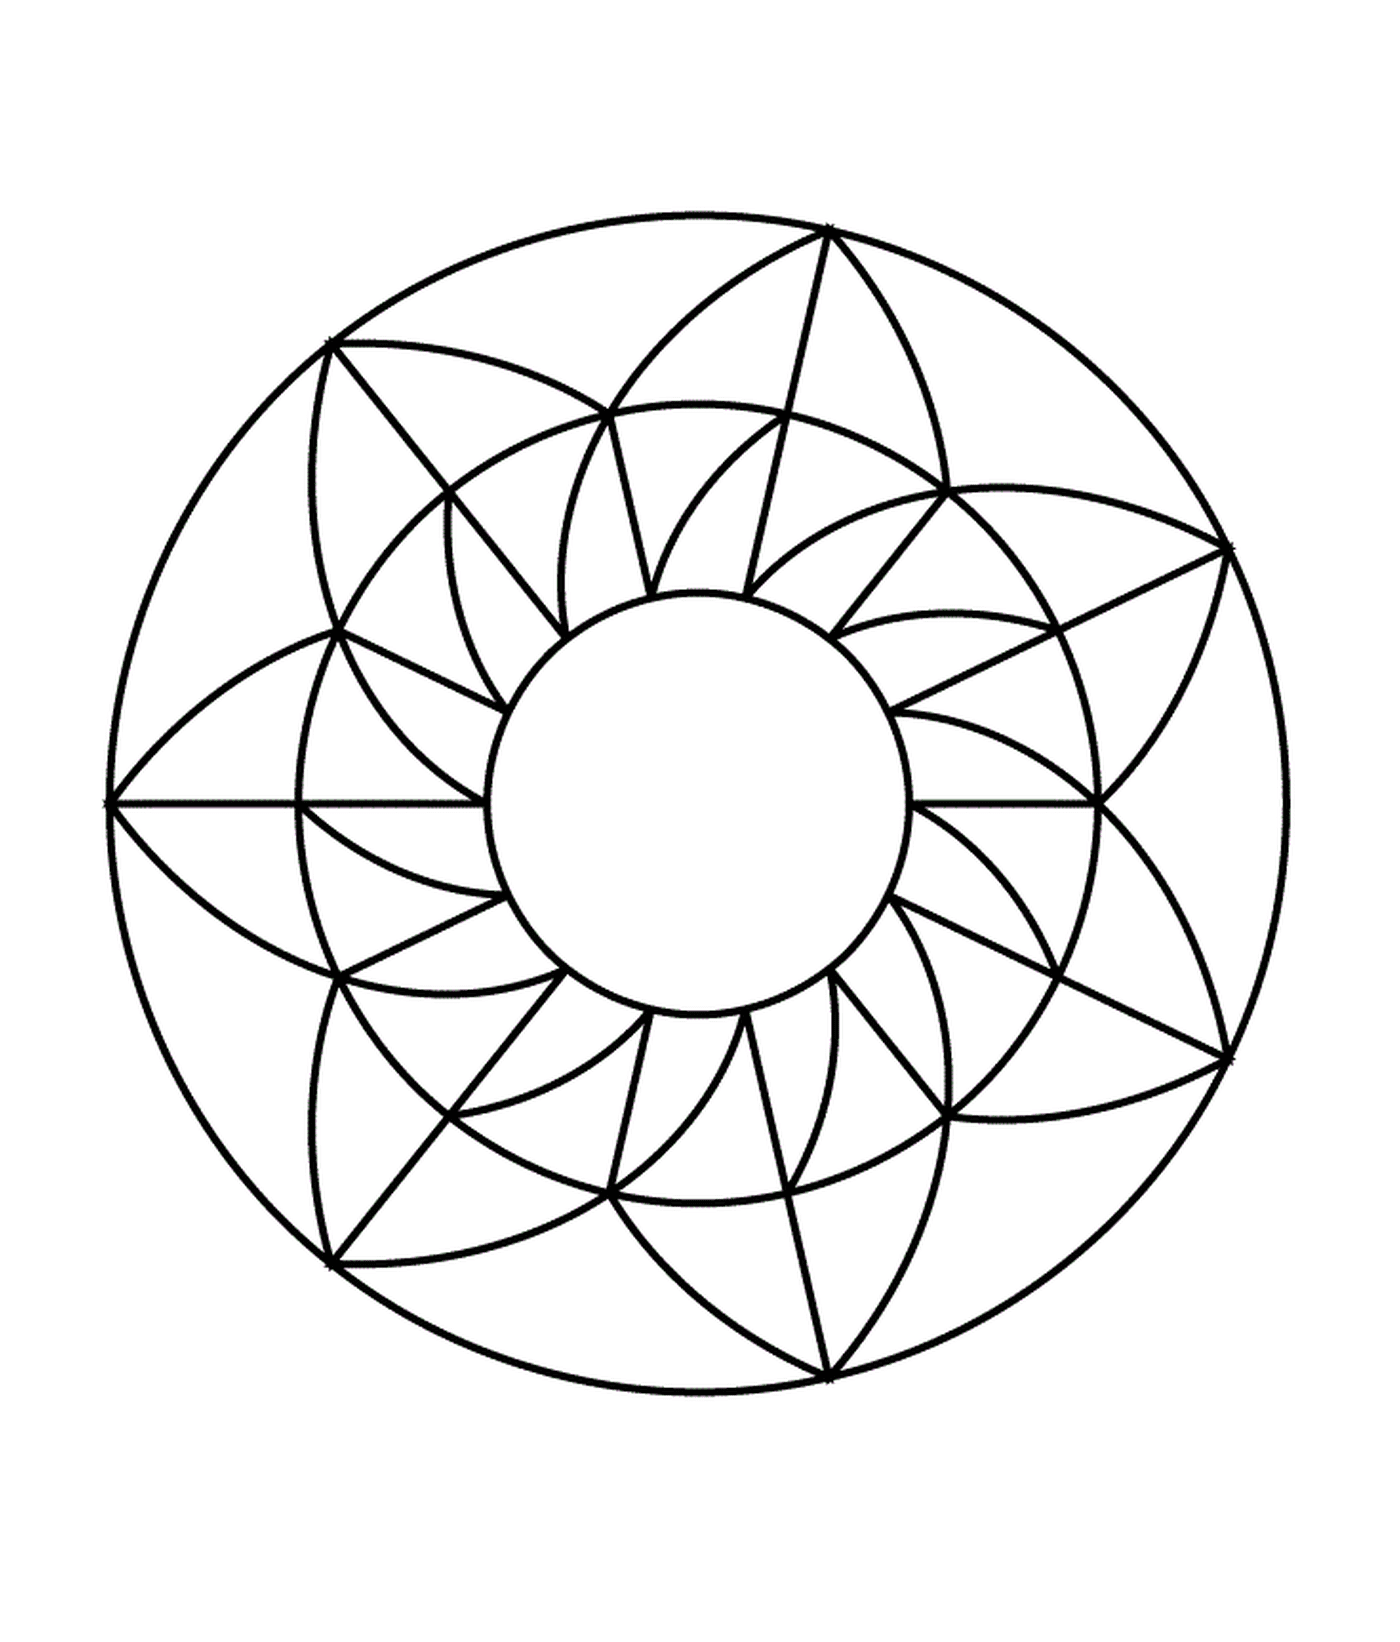  Круг с геометрическим рисунком в центре 